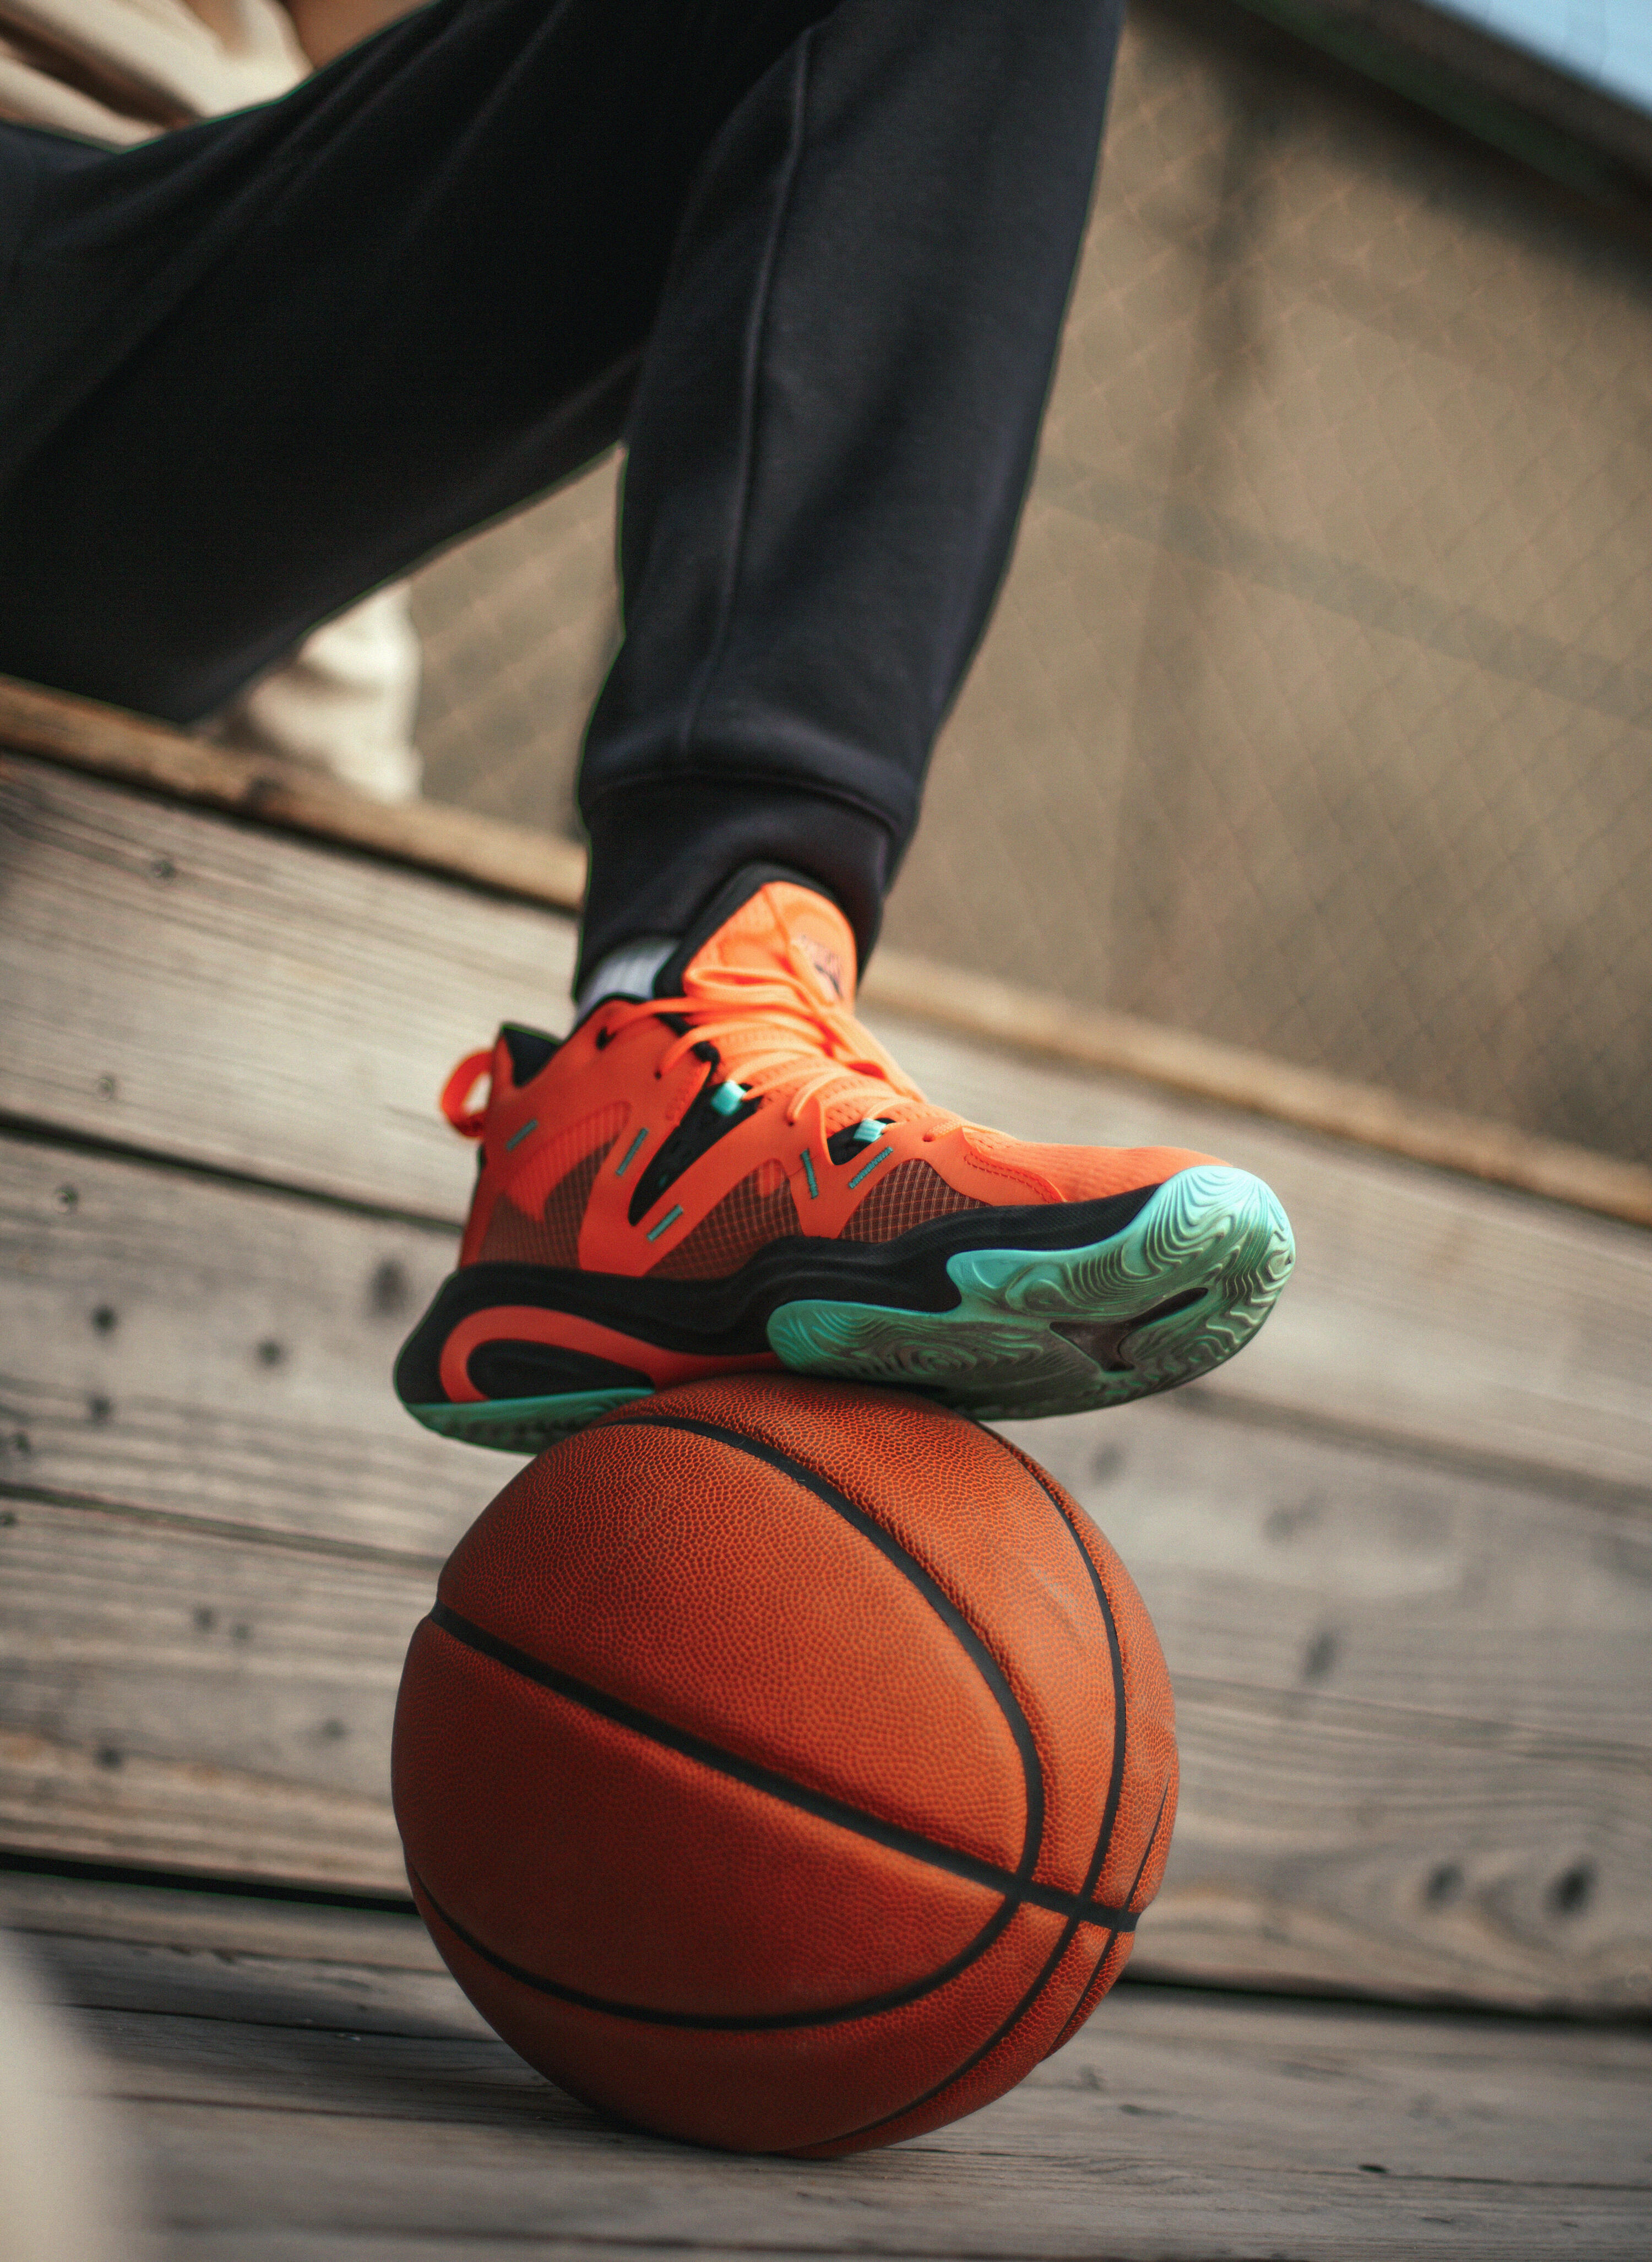 Men's/Women's Basketball Shoes 900 NBA MID-3 - New York Knicks/Orange 9/11